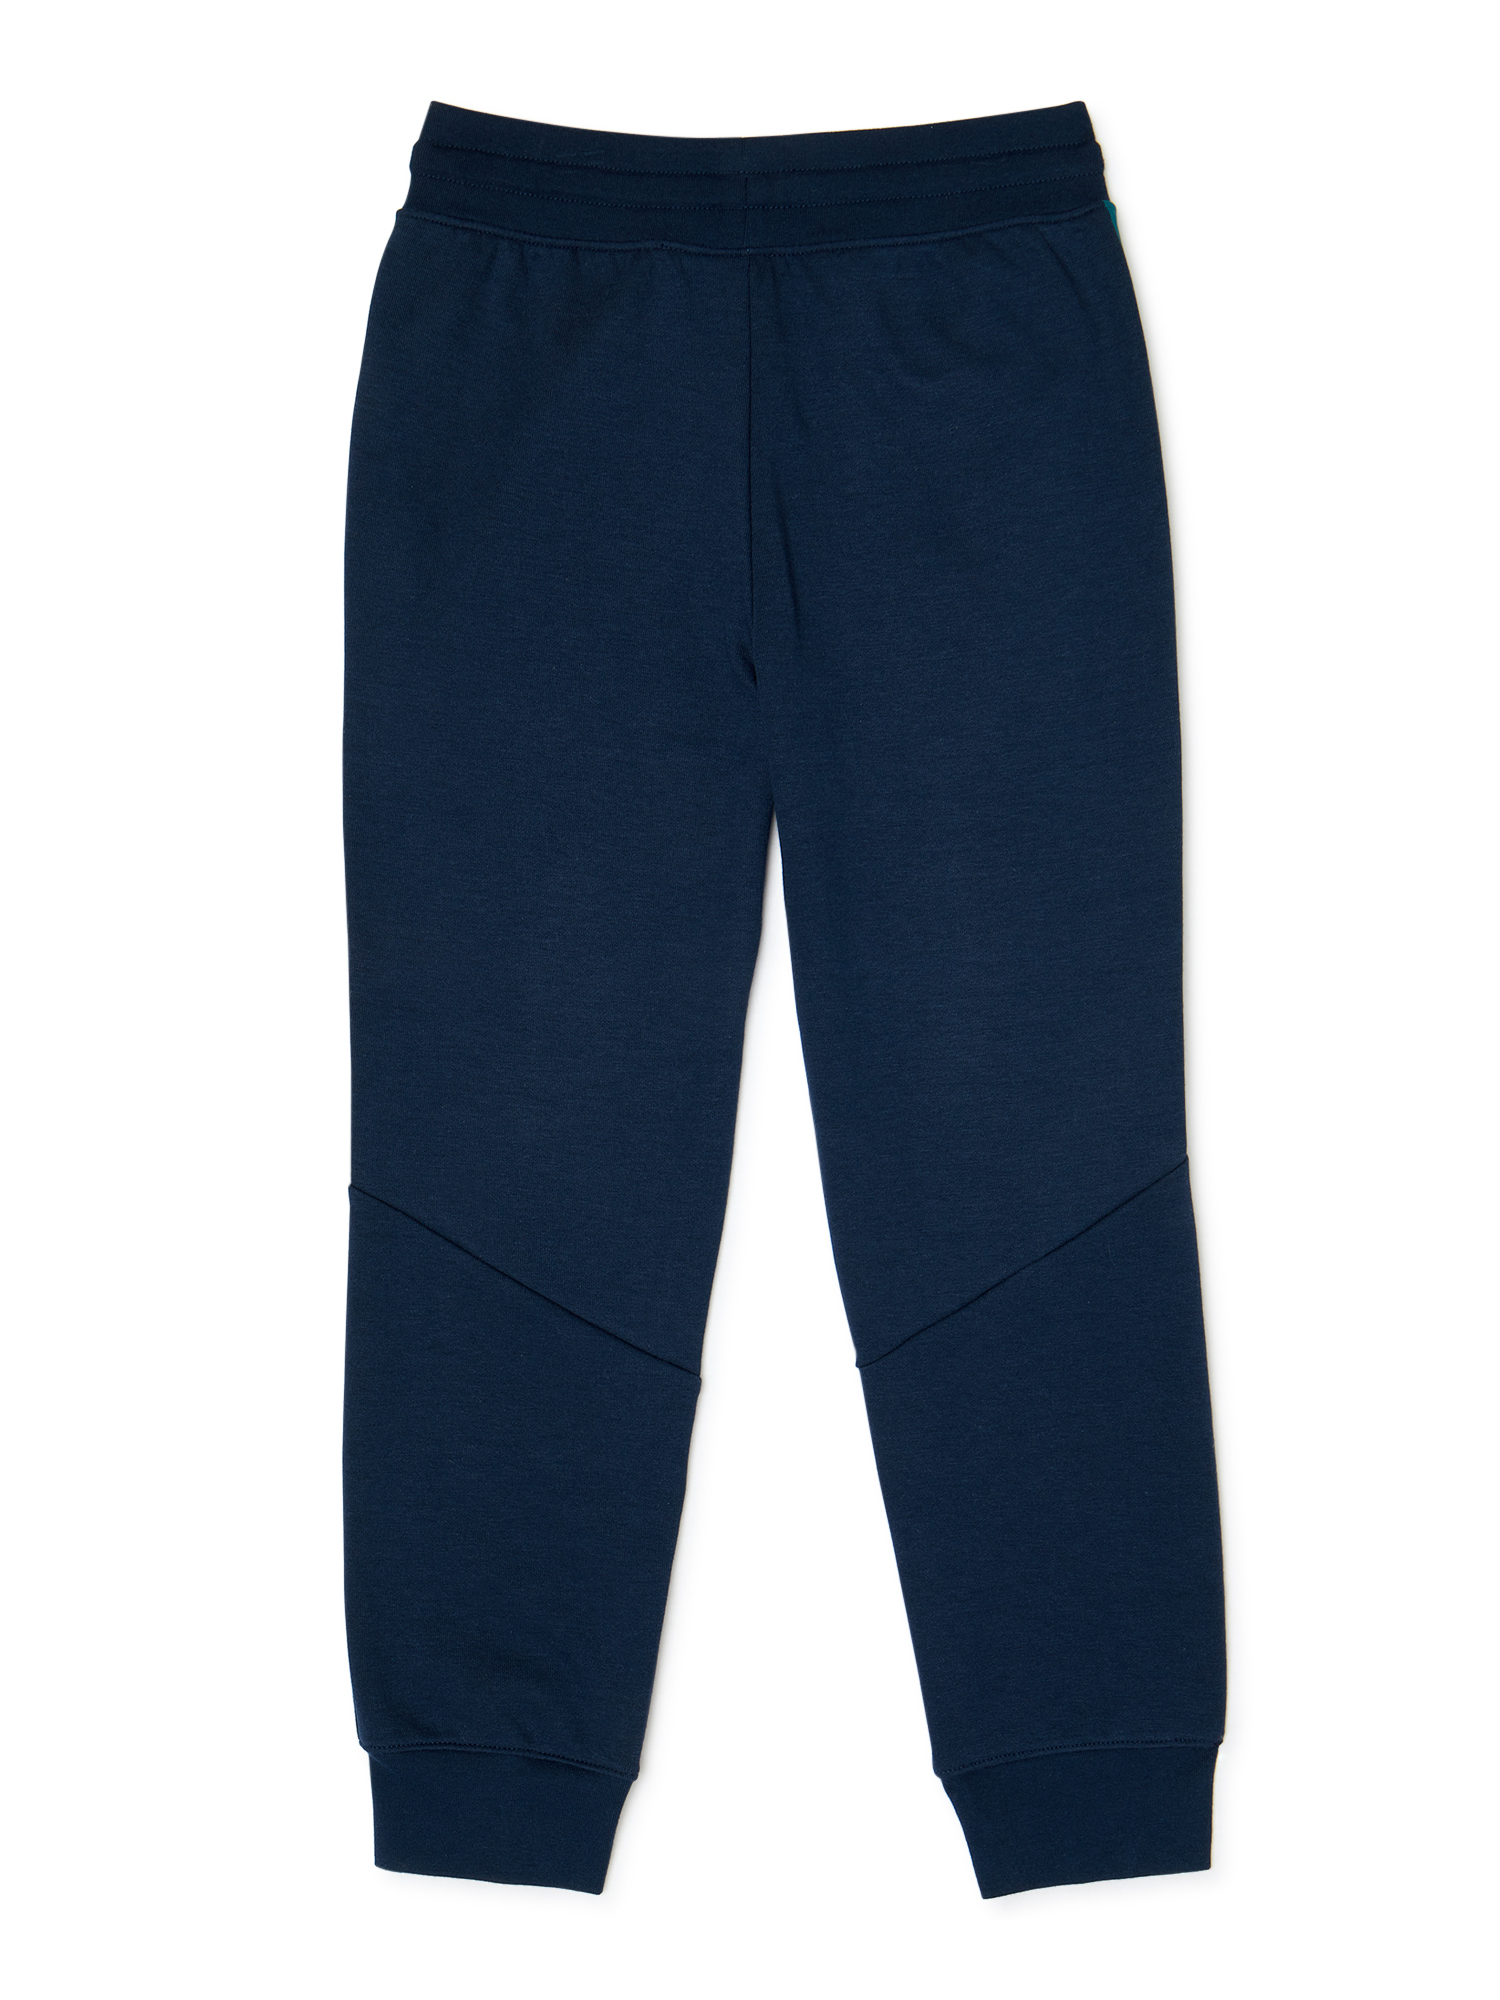 Athletic Works Boys Knit Jogger Sweatpants Sizes 4-18 & Husky - image 3 of 3